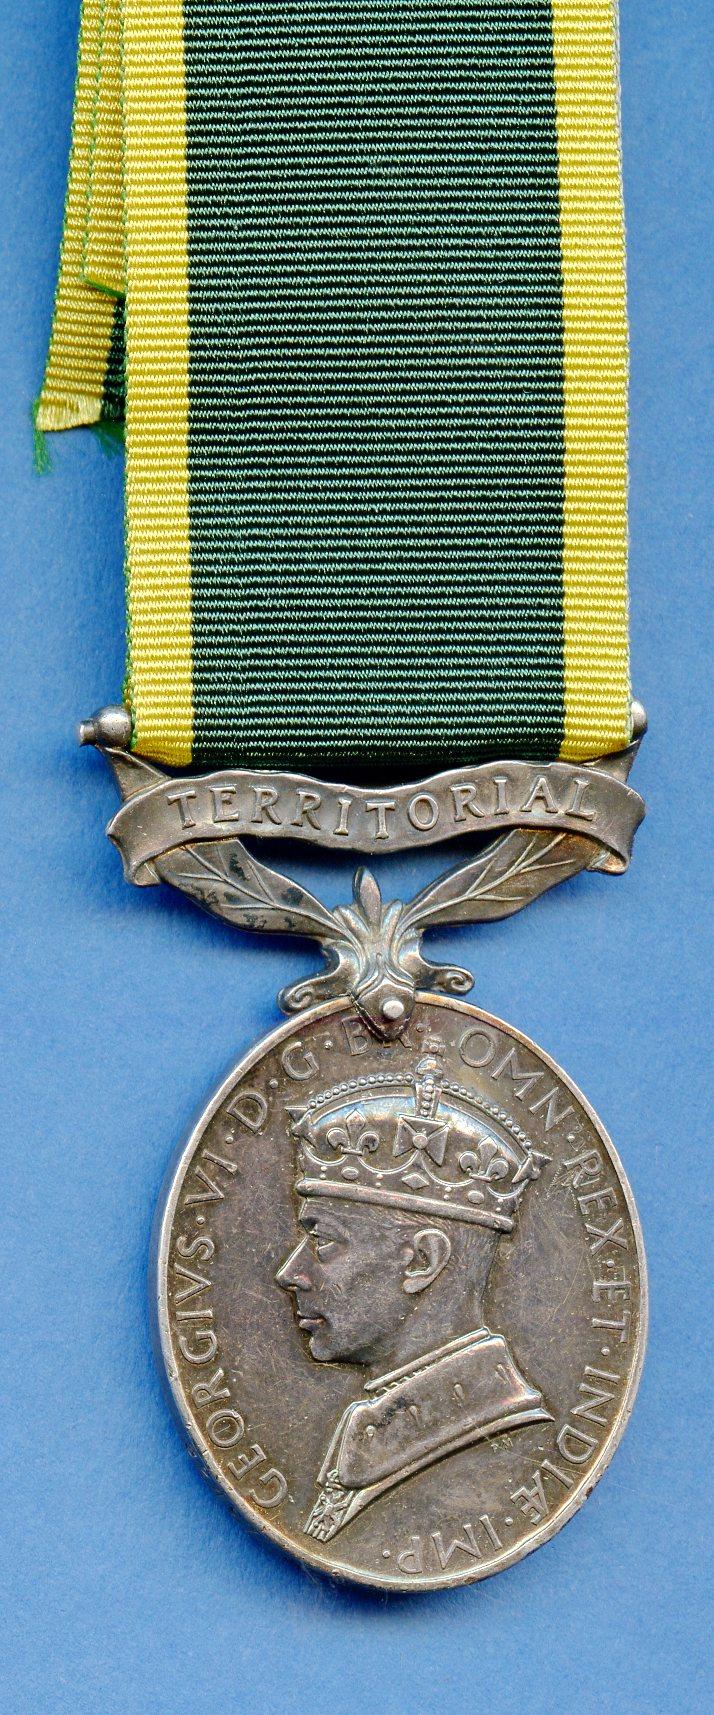 Territorial Efficiency Medal : Bmbr G McMillan. Royal Artillery